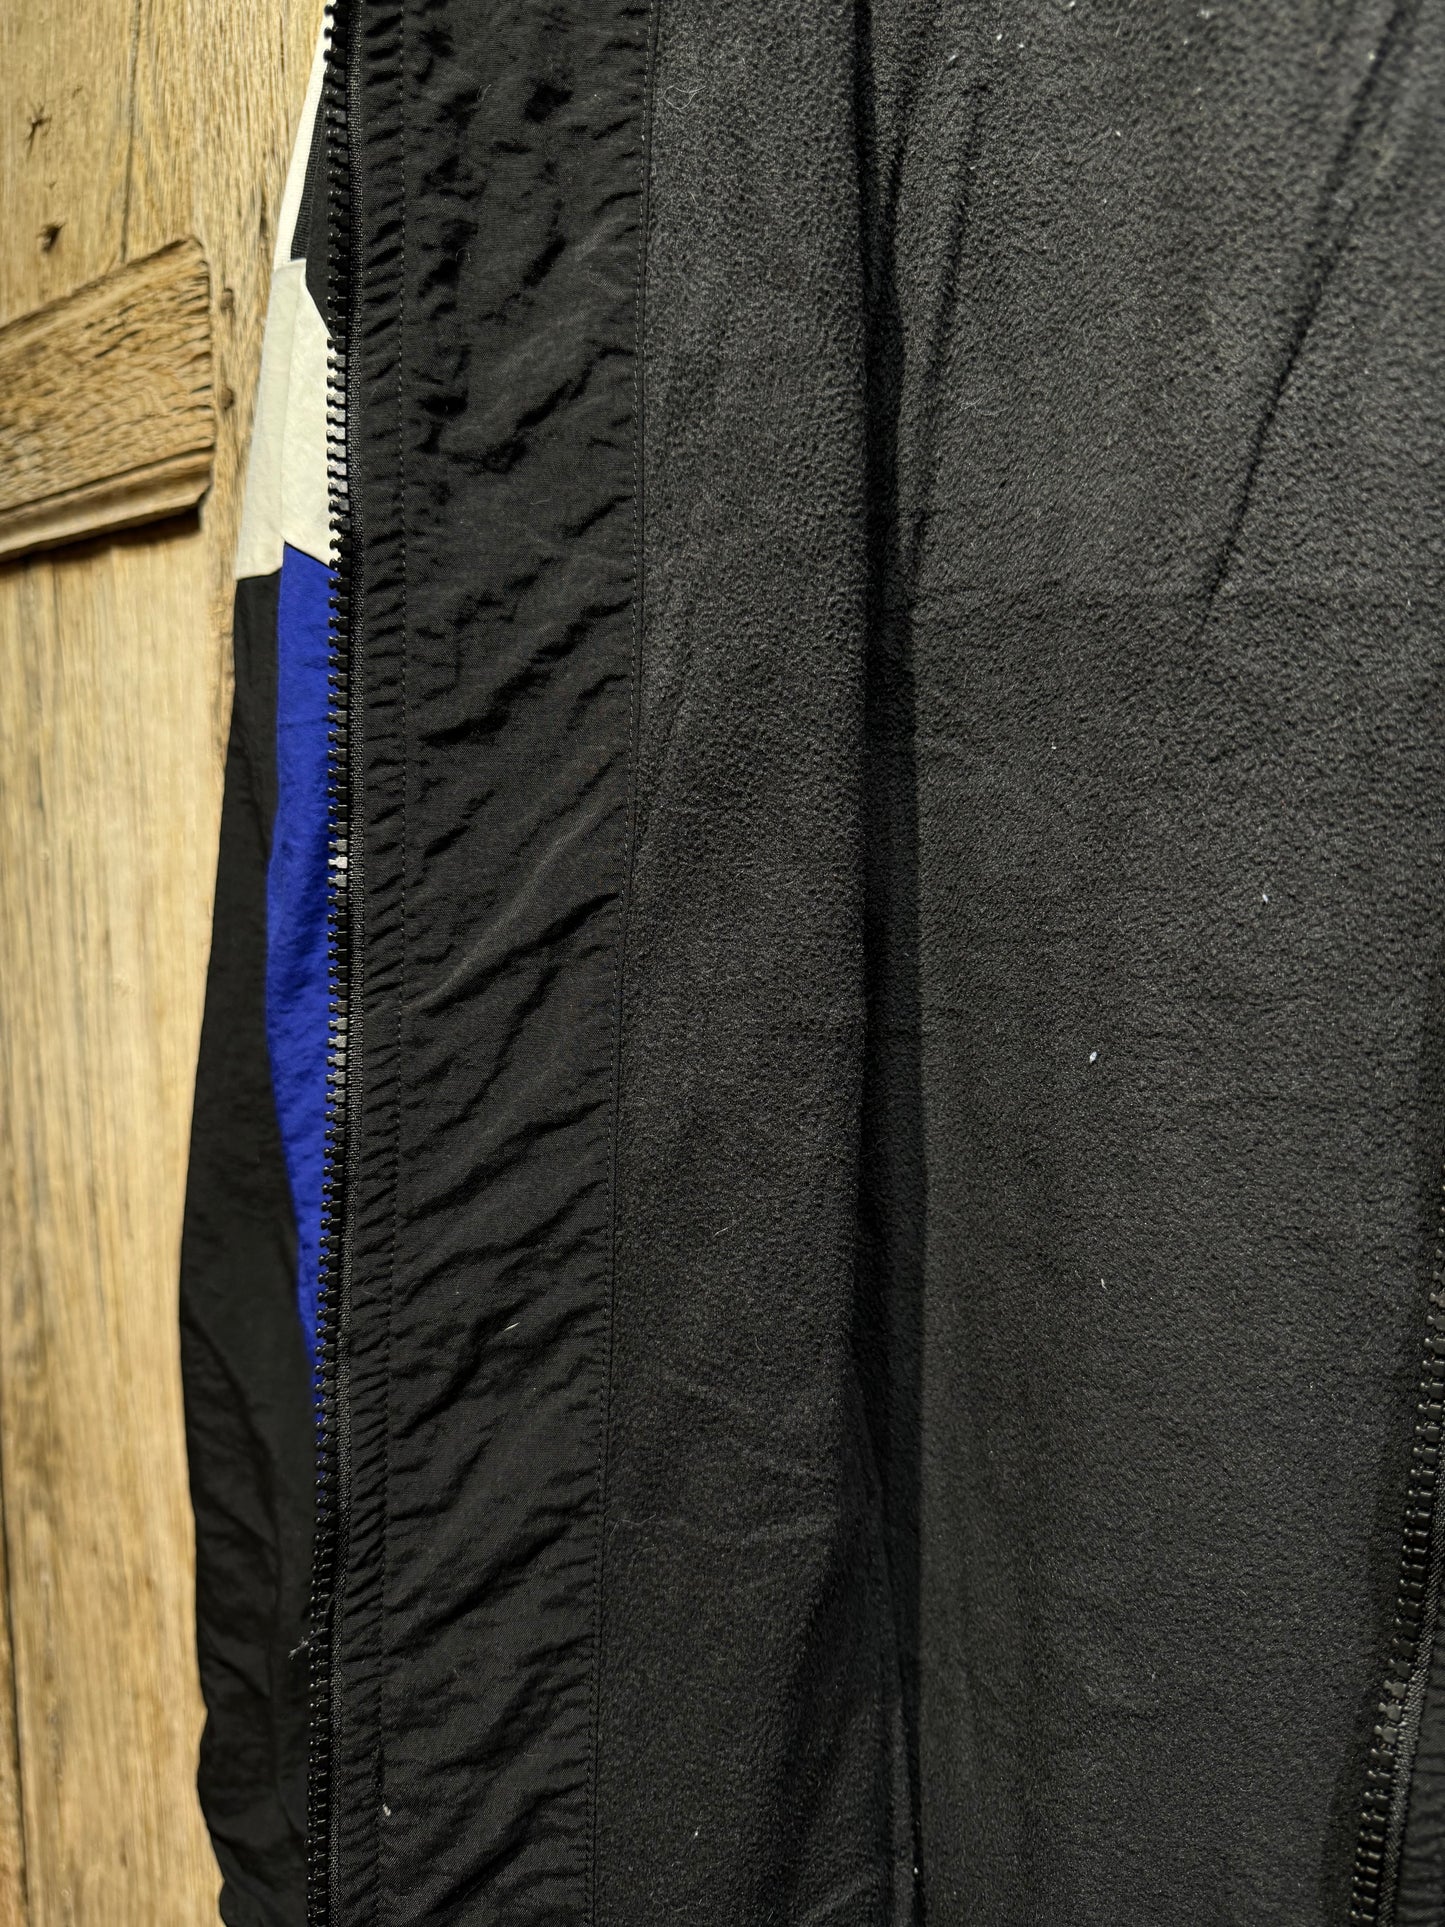 Adidas Black Fleece Jacket